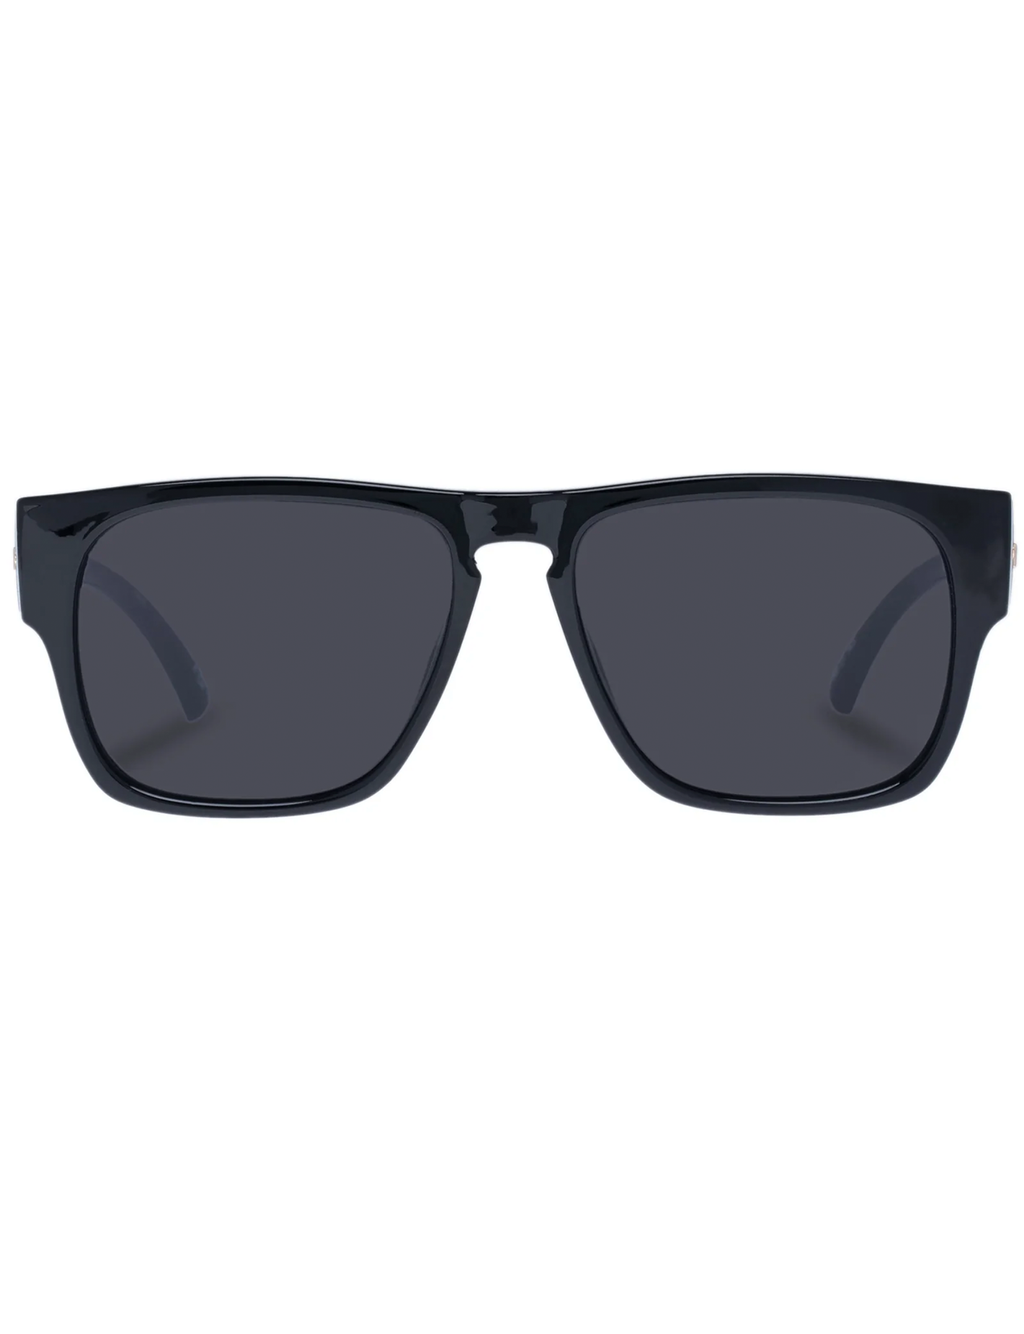 Transmission Sunglasses, Black